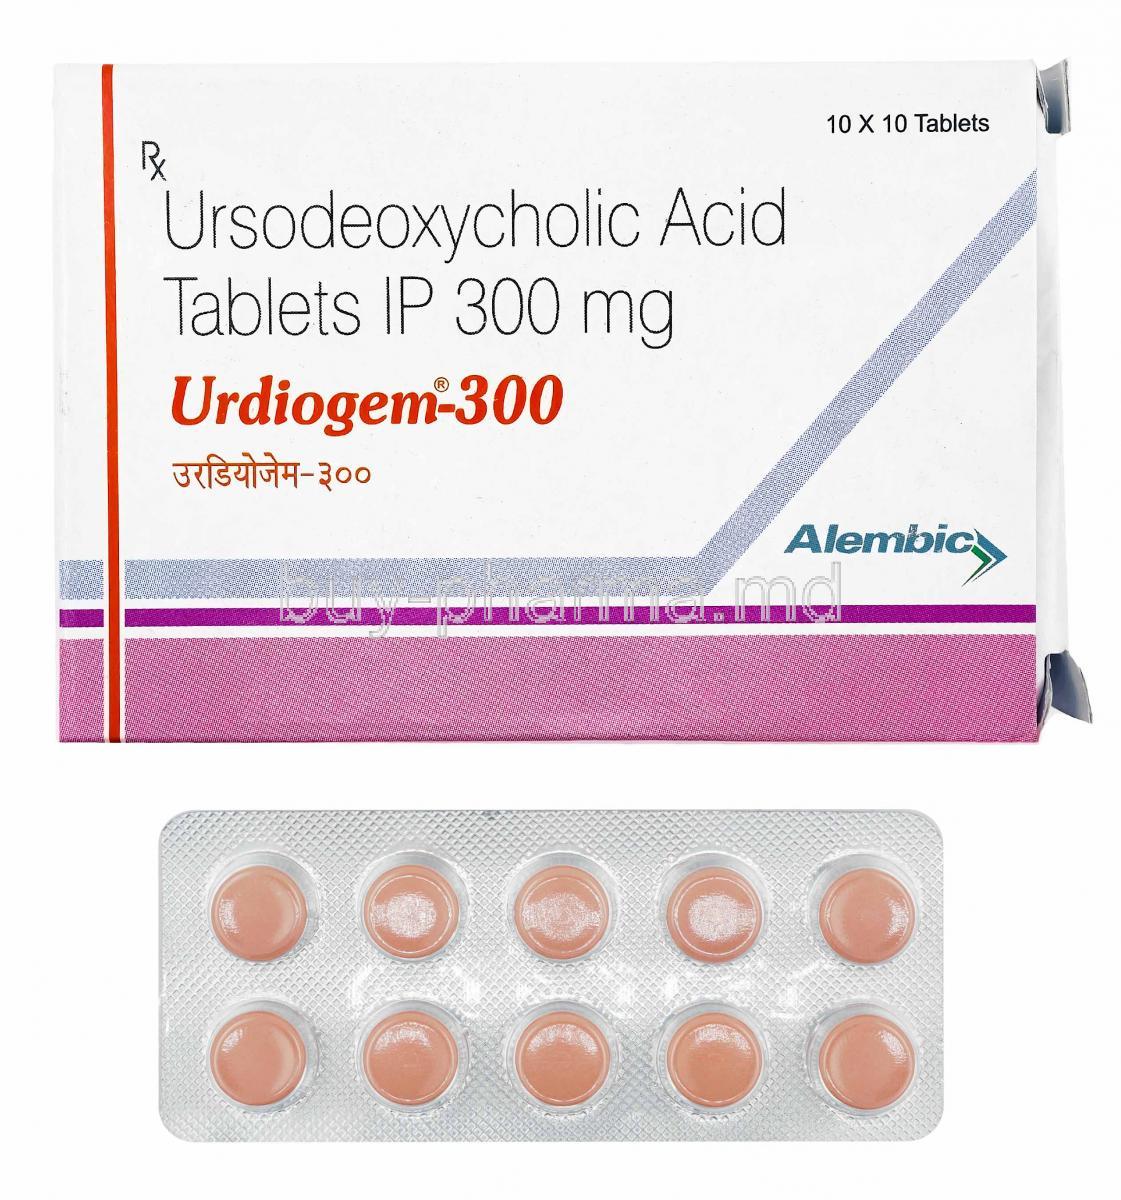 Urdiogem, Ursodiol 300mg box and tablets